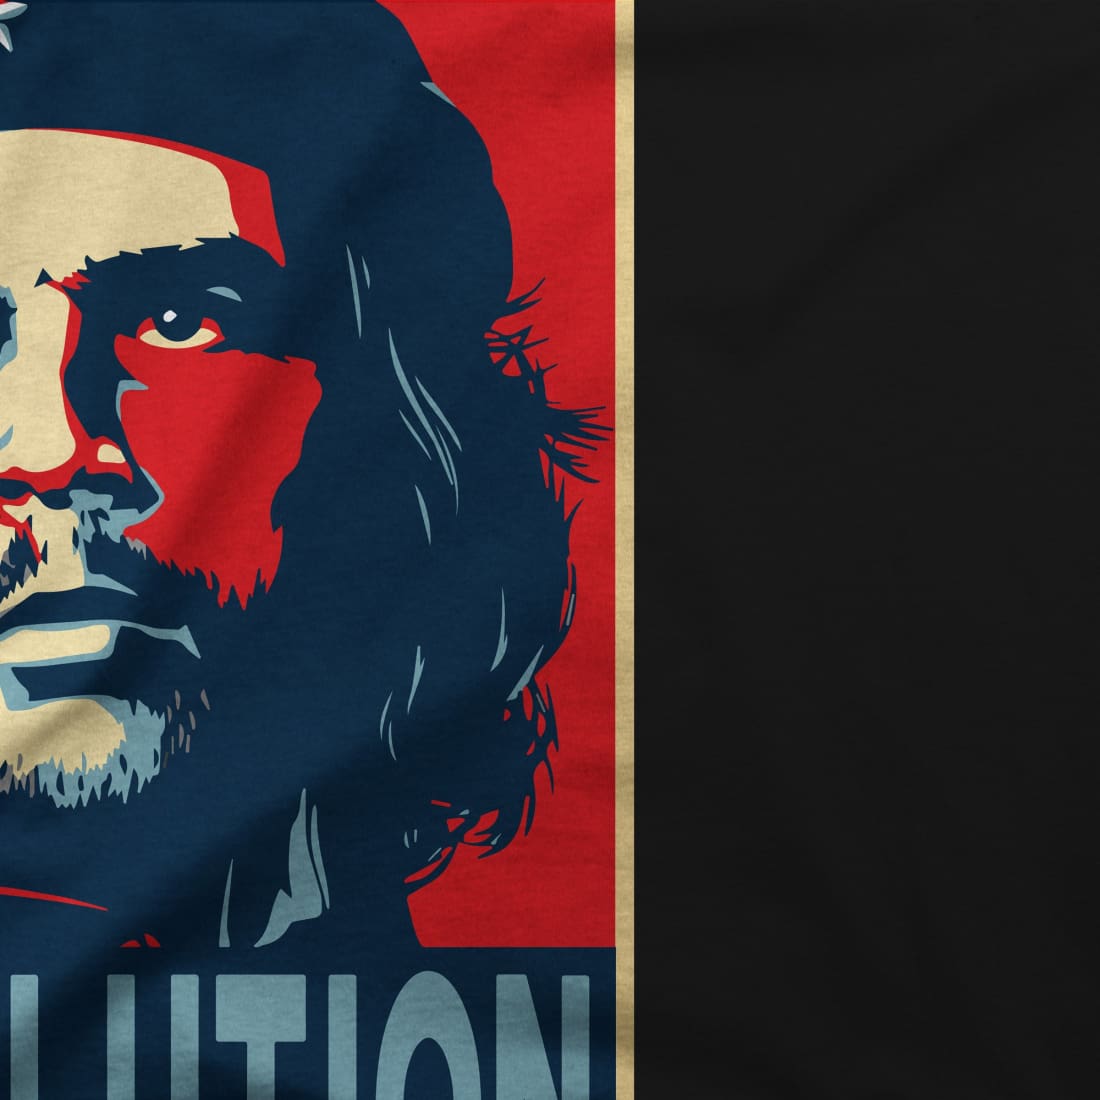 KewaleeTee Ernesto Che Guevara T-Shirt